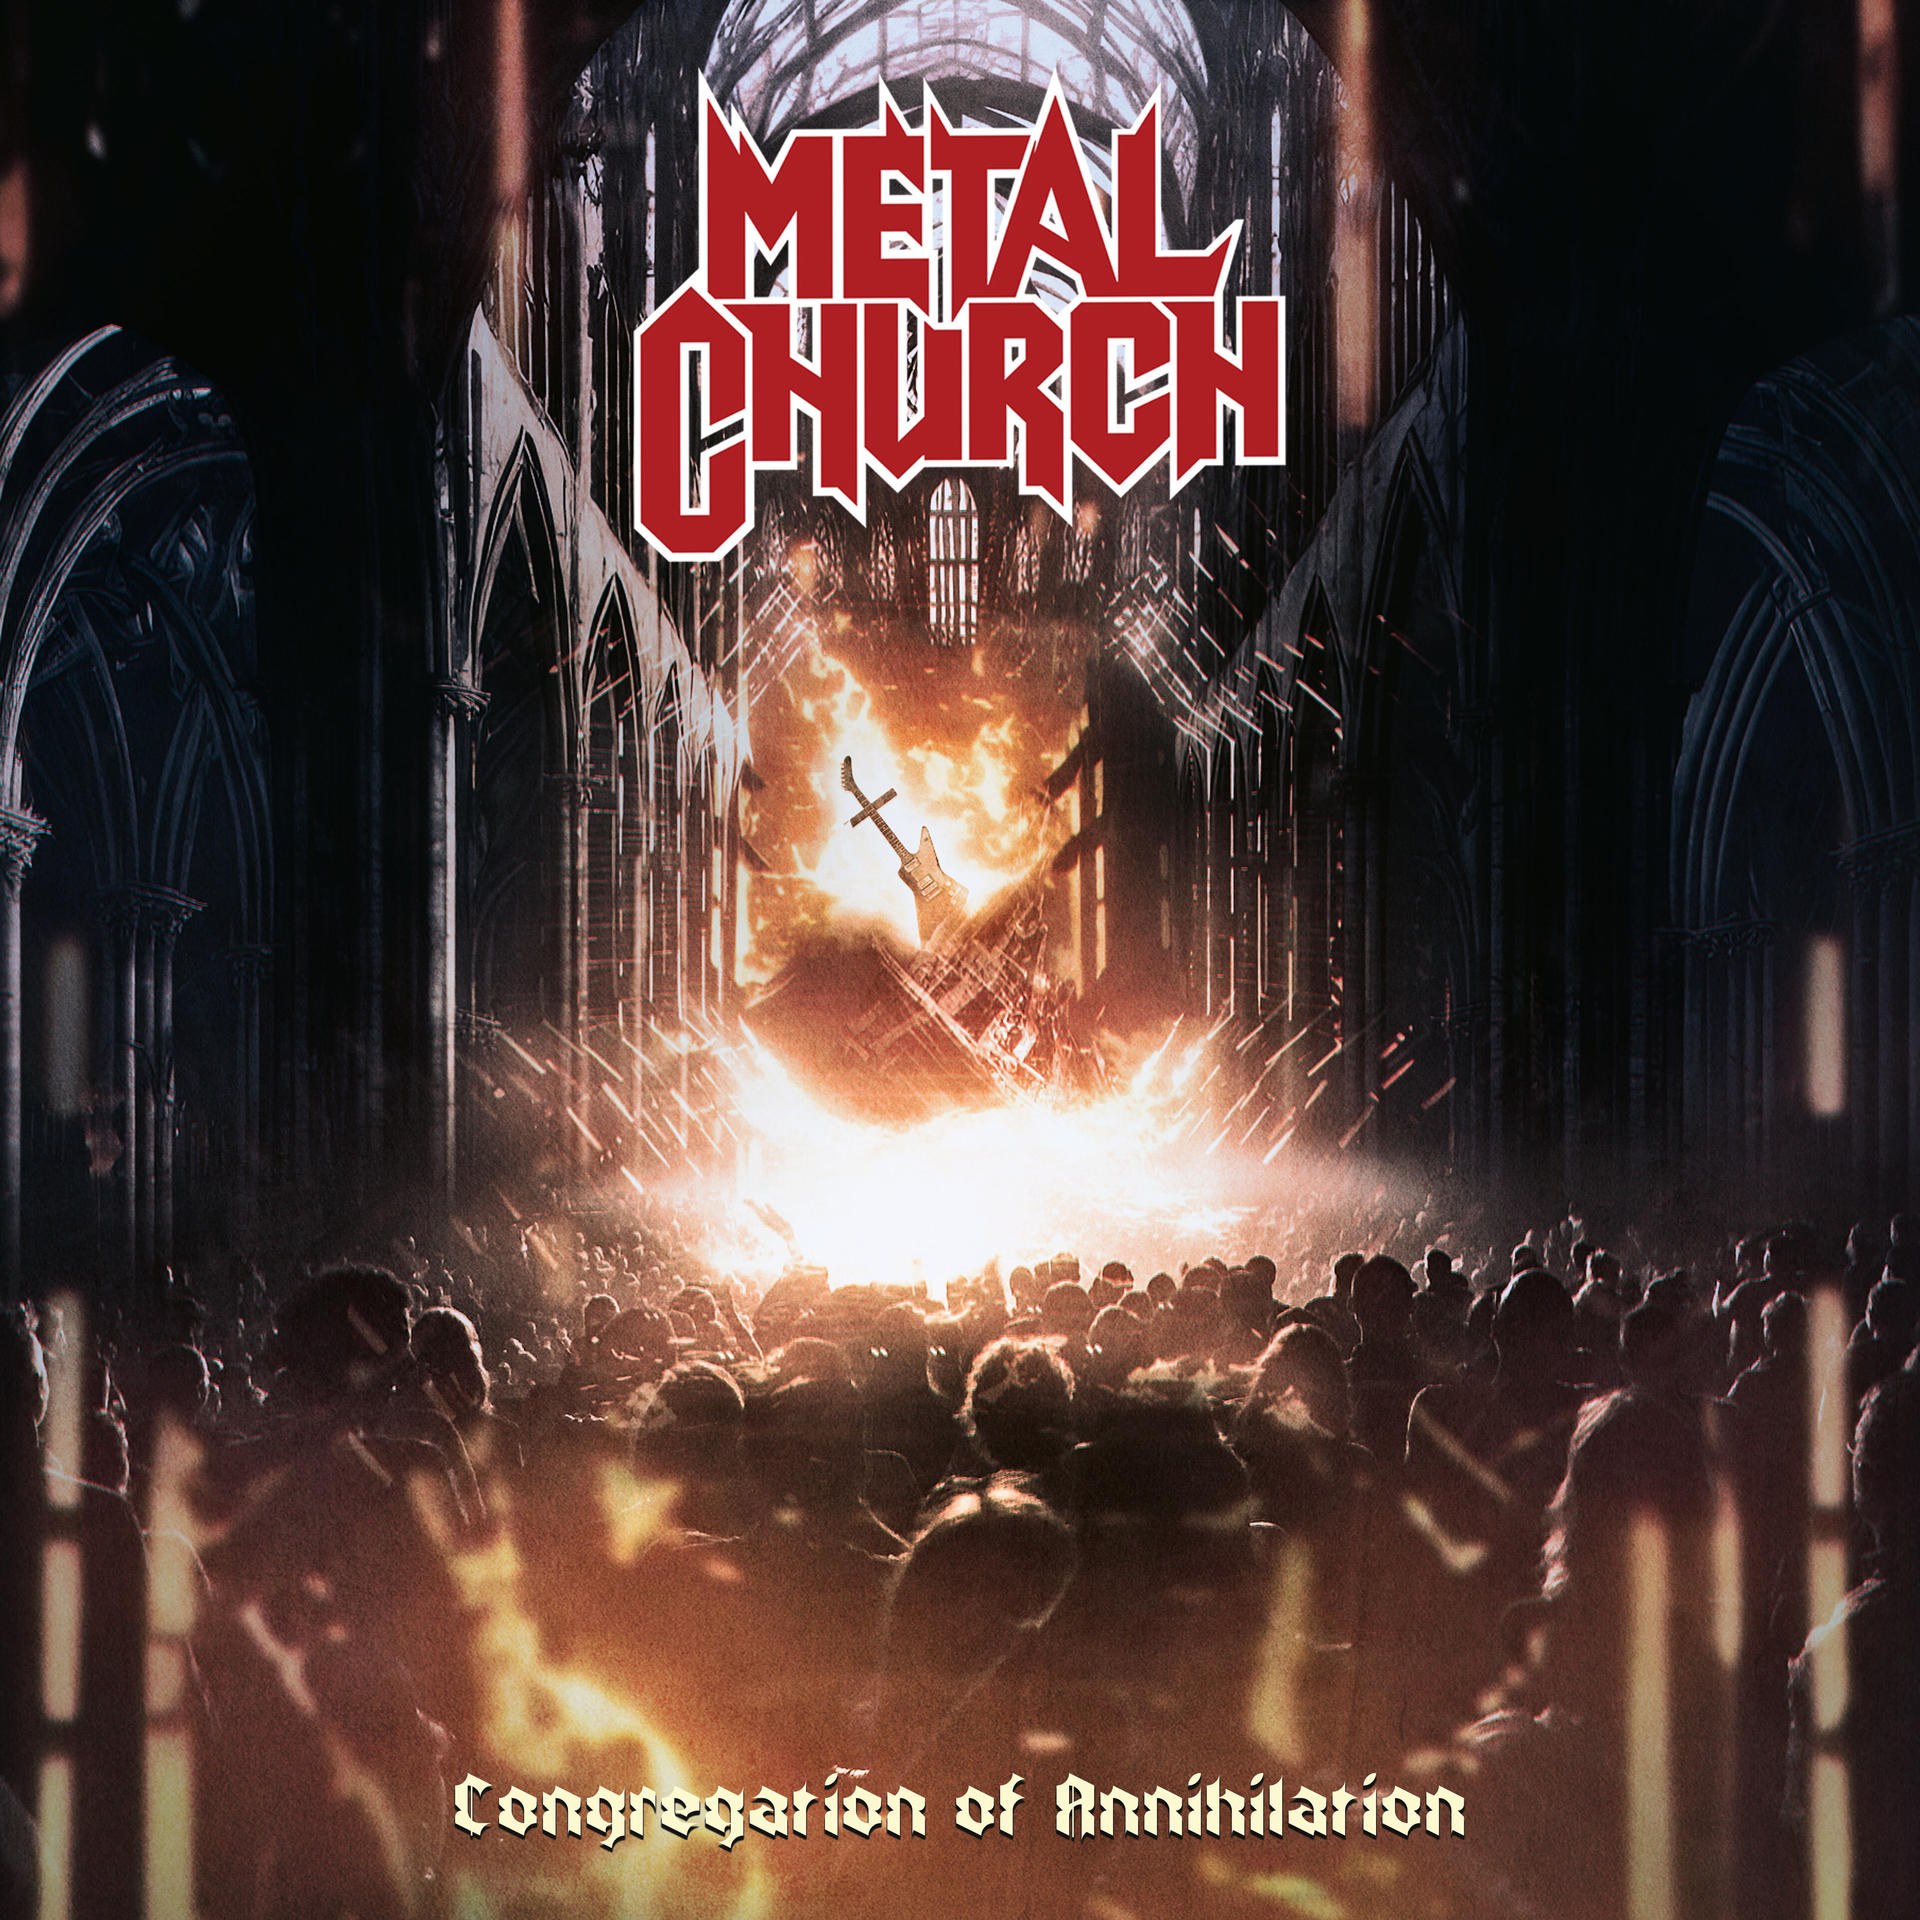 - Church (Vinyl) (Splatter Congregation Vinyl) Annihilation Metal - of